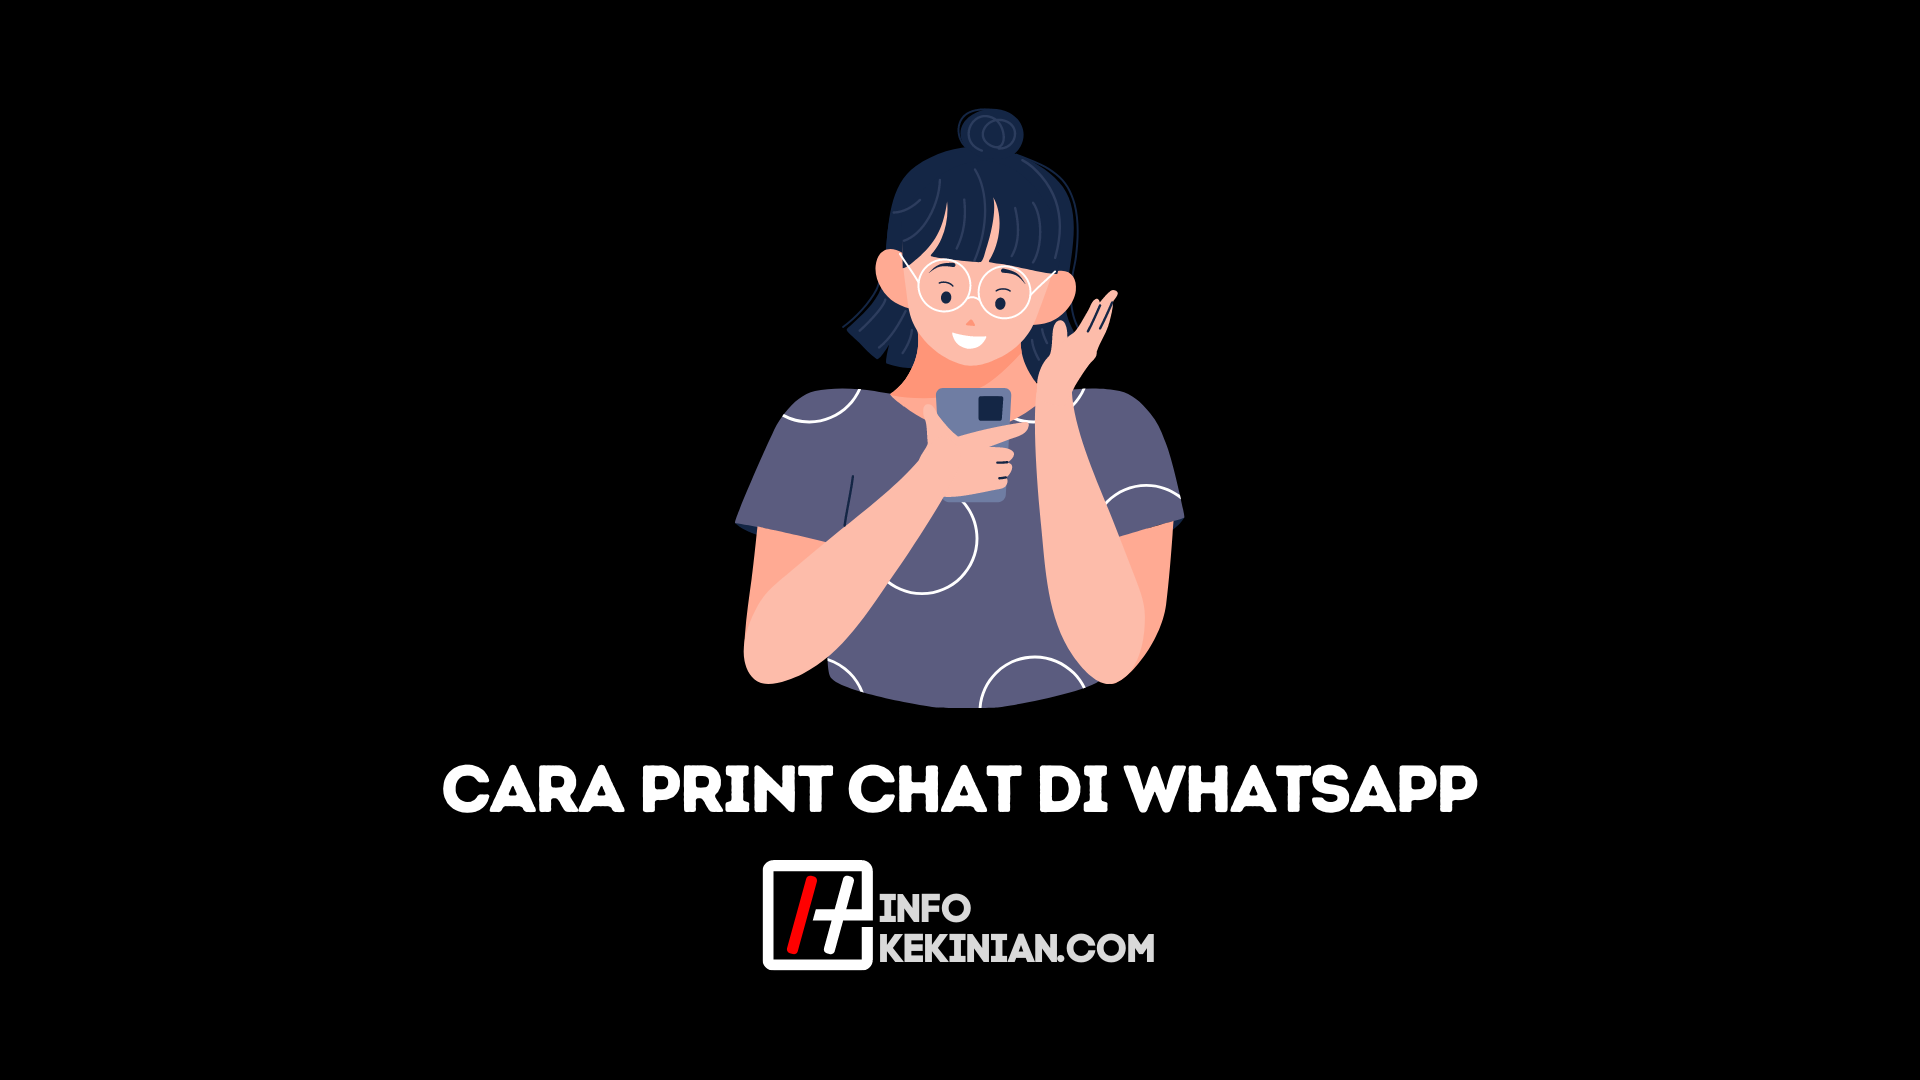 Daftar Cara Print Chat WhatsApp